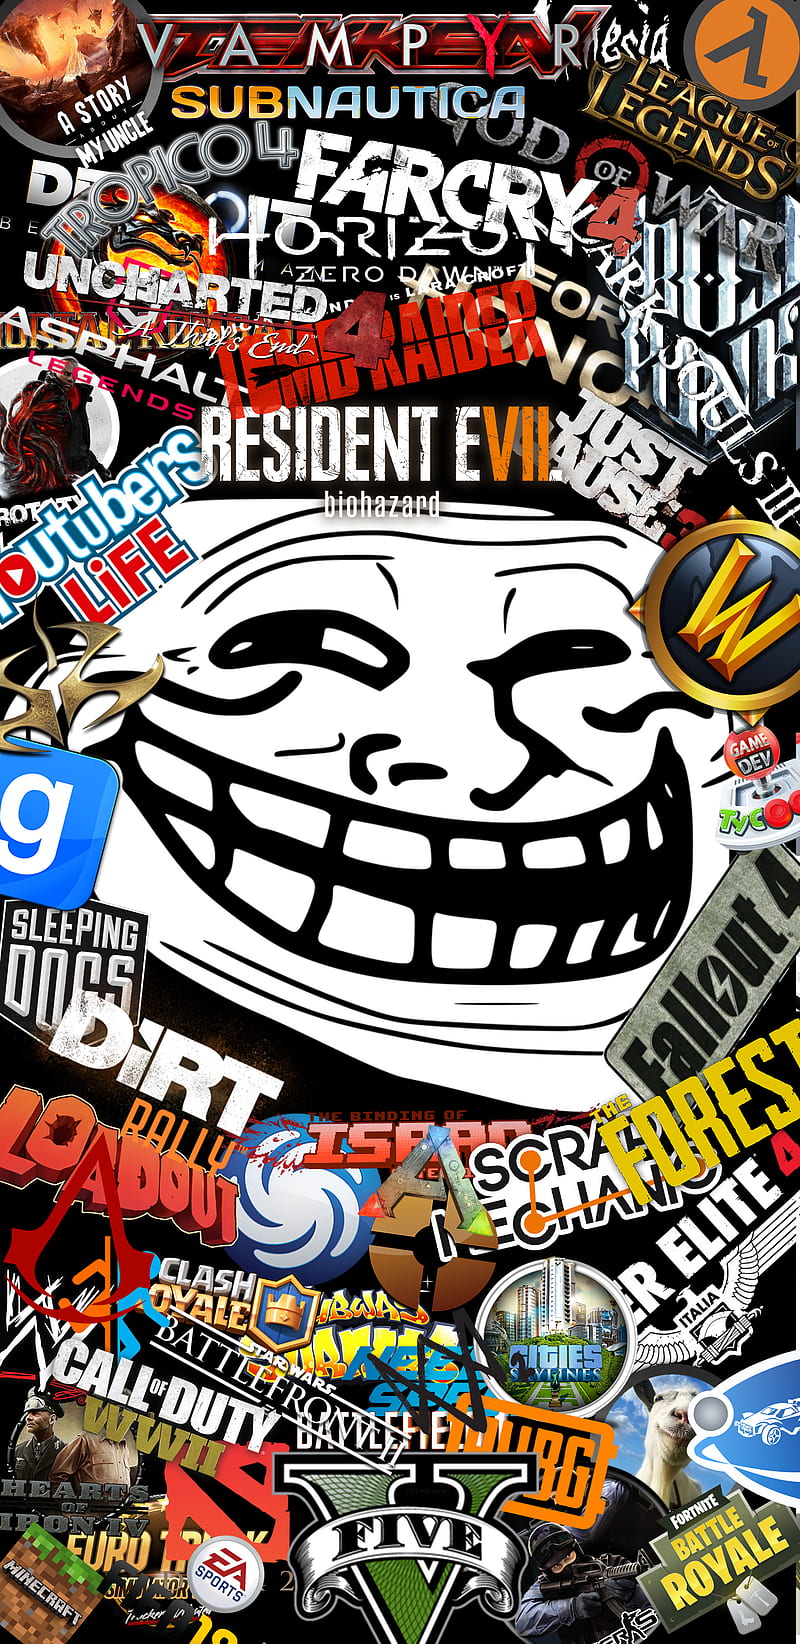 Papel de Parede Grátis para PC: iPhone Wallpaper Troll Face